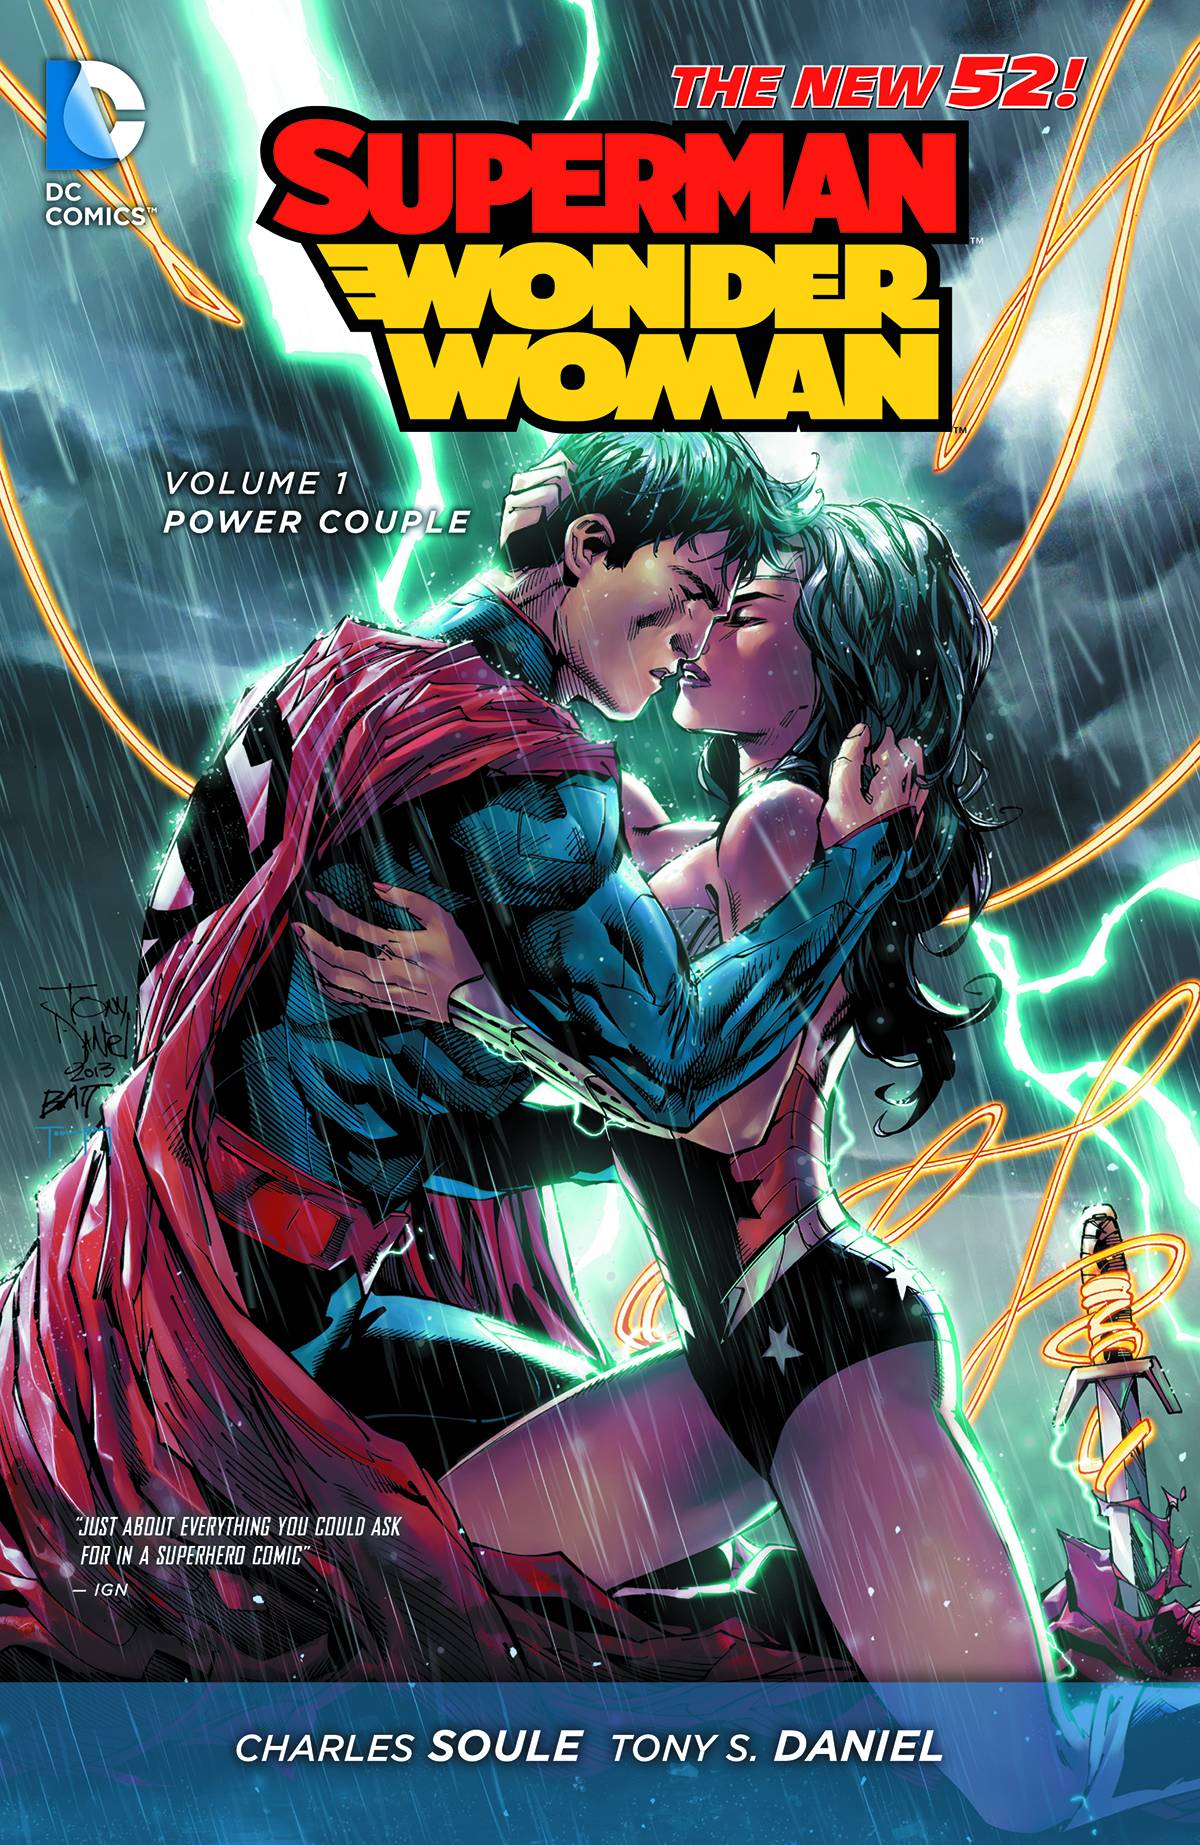 Superman Wonder Woman Graphic Novel Volume 1 Power Couple (New 52)